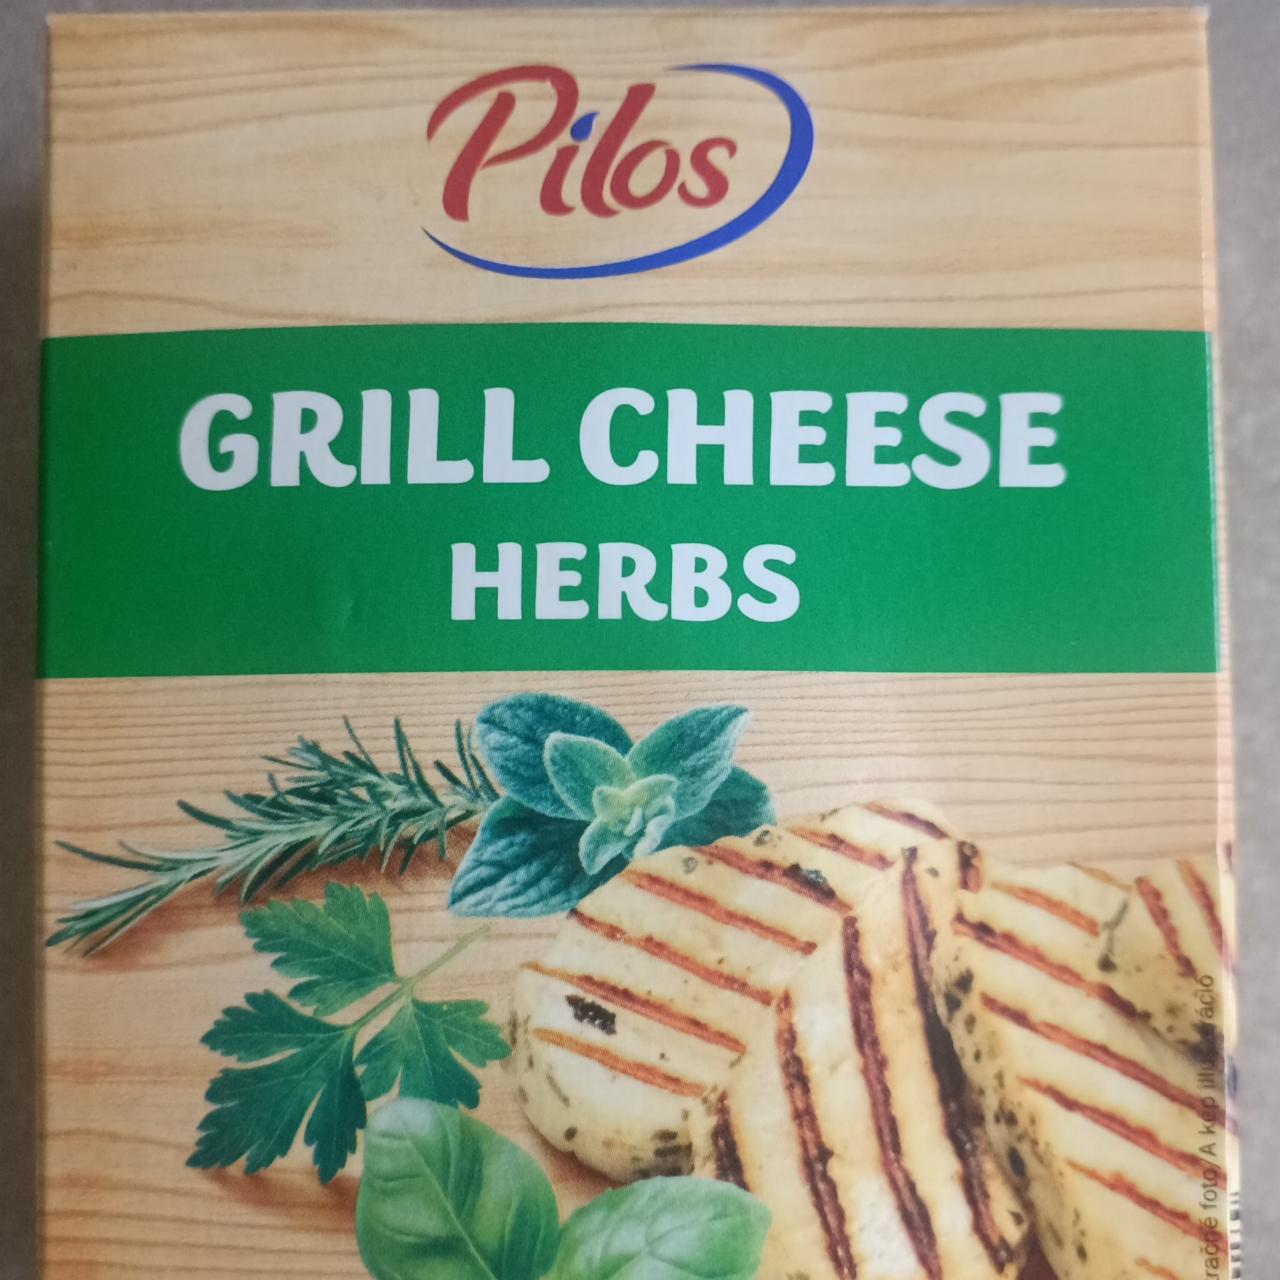 Képek - Grill Cheese Herbs Pilos